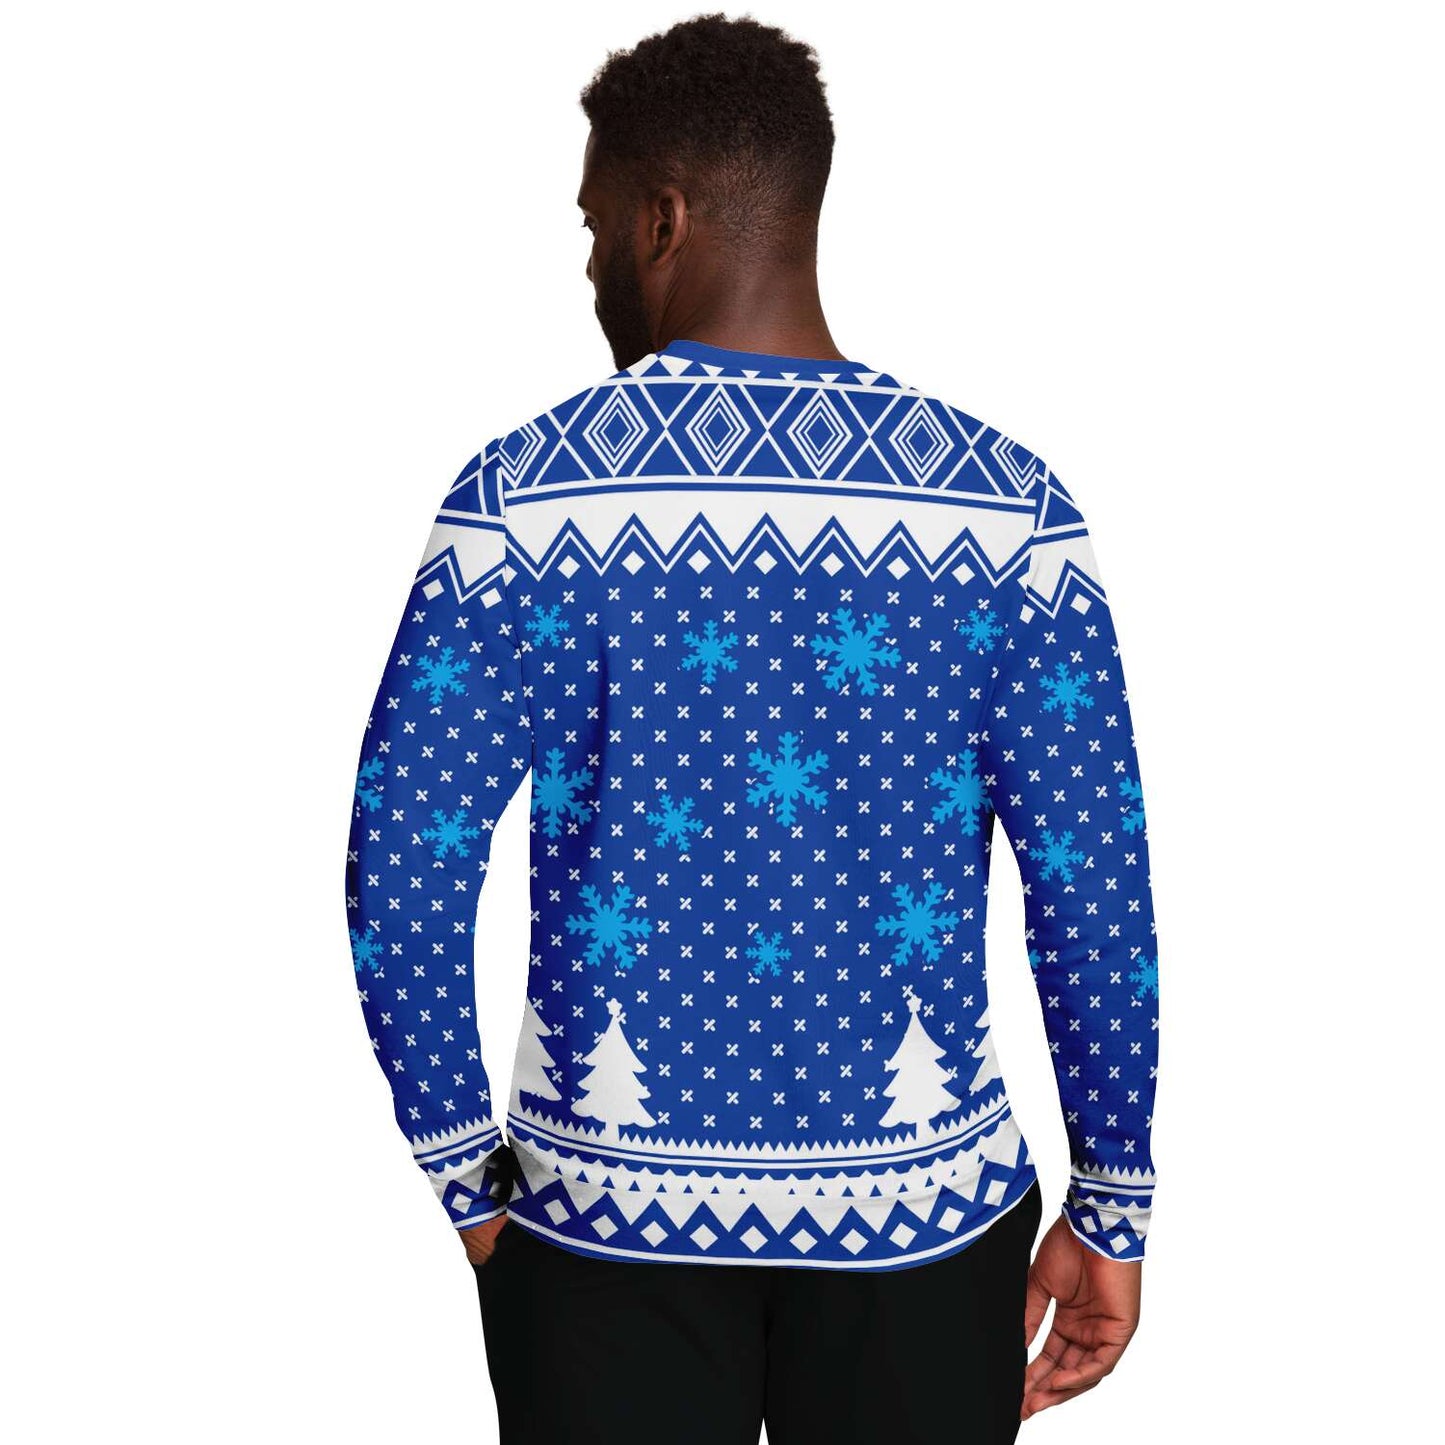 Prickly and Lit Ugly Christmas Sweatshirt Fashion Sweatshirt - AOP Subliminator 